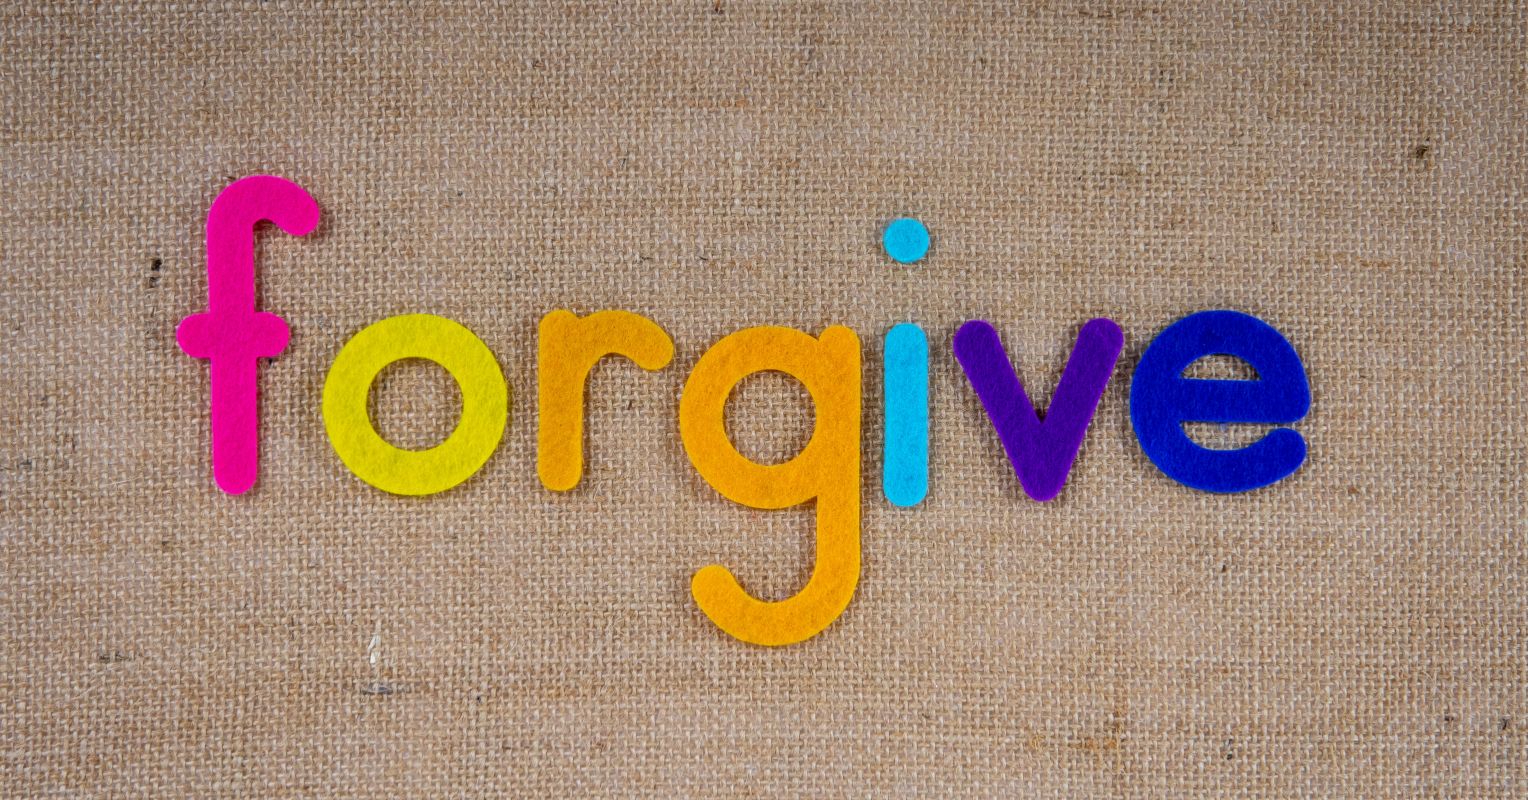 forgiveness word art